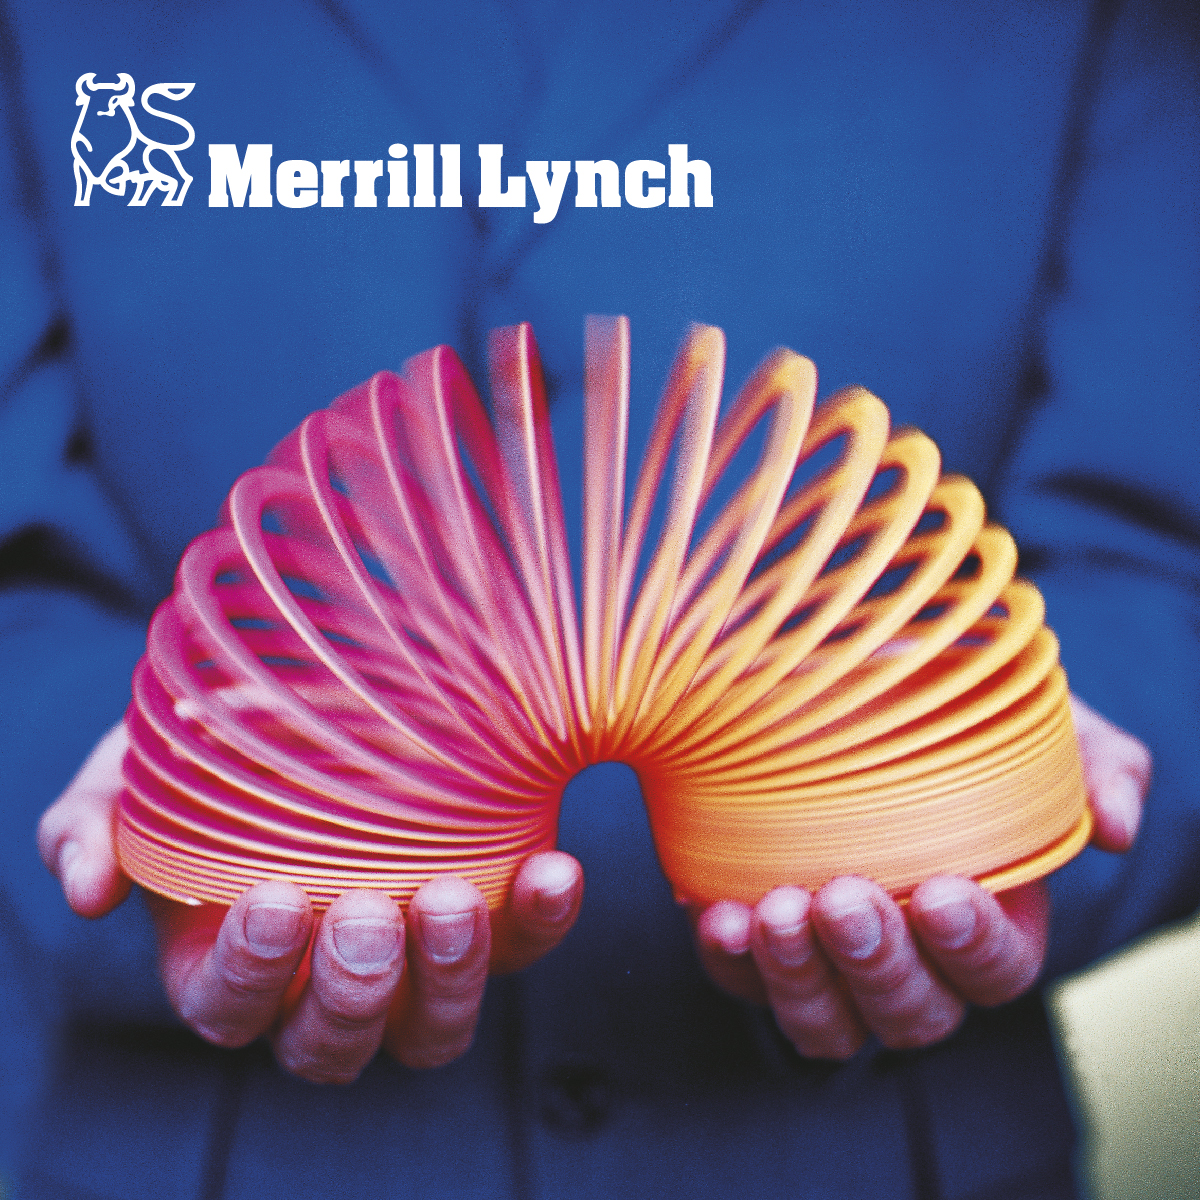 Merrill Lynch American Banking System Brand Identity Design